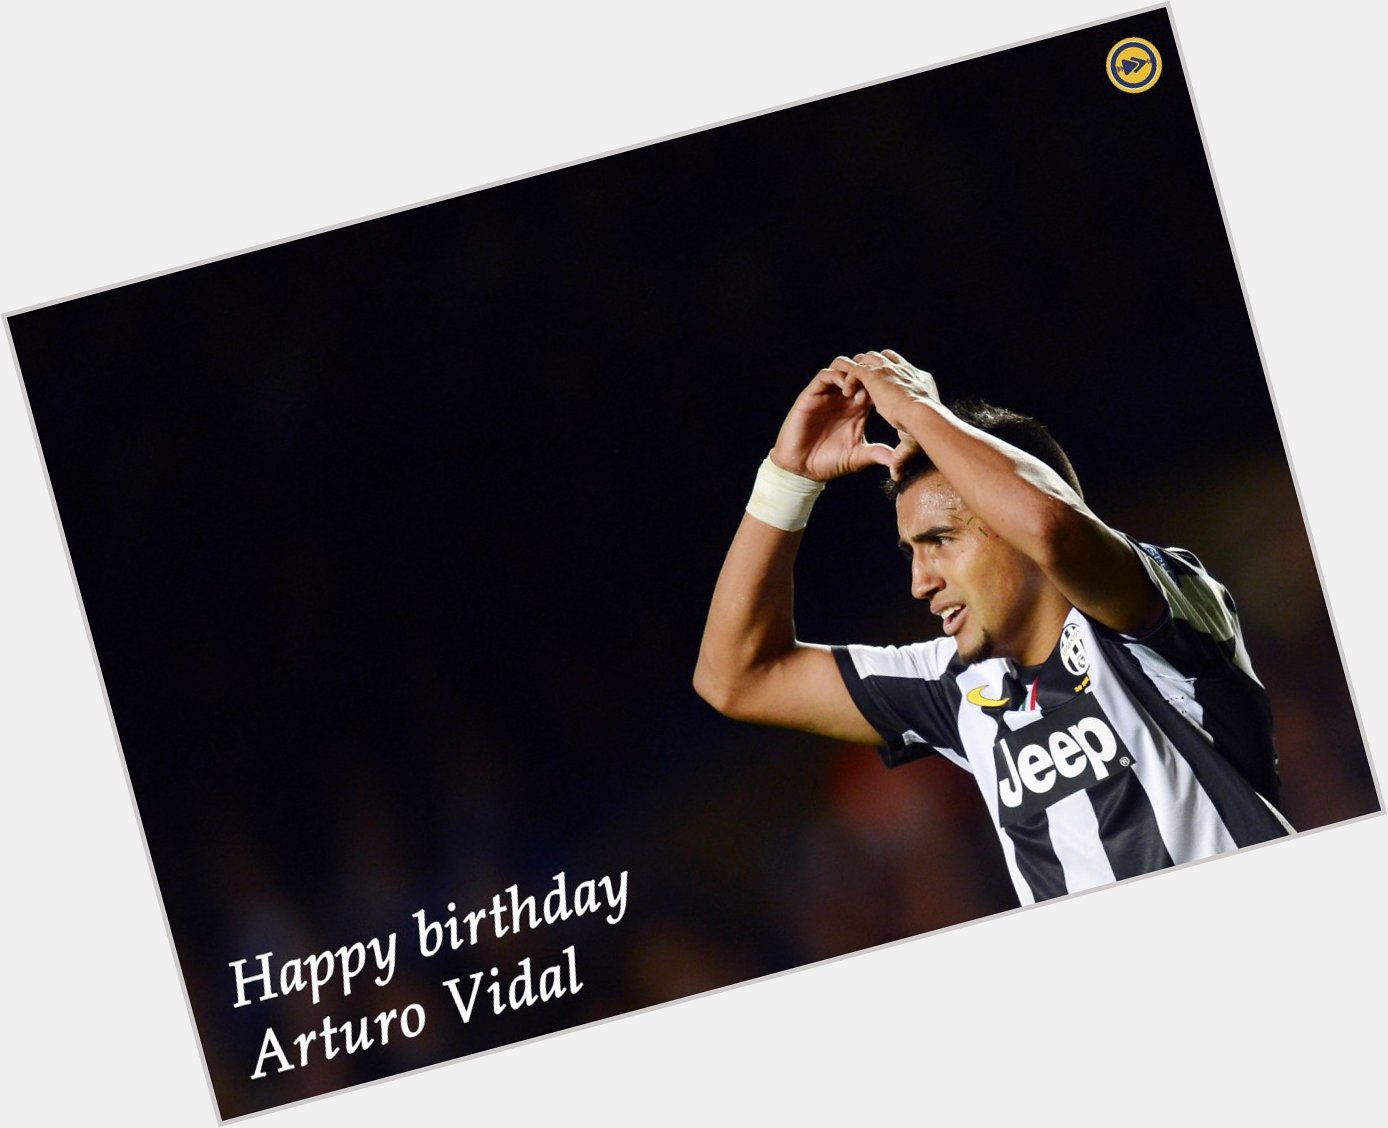 Happy birthday to Arturo Vidal!!!  